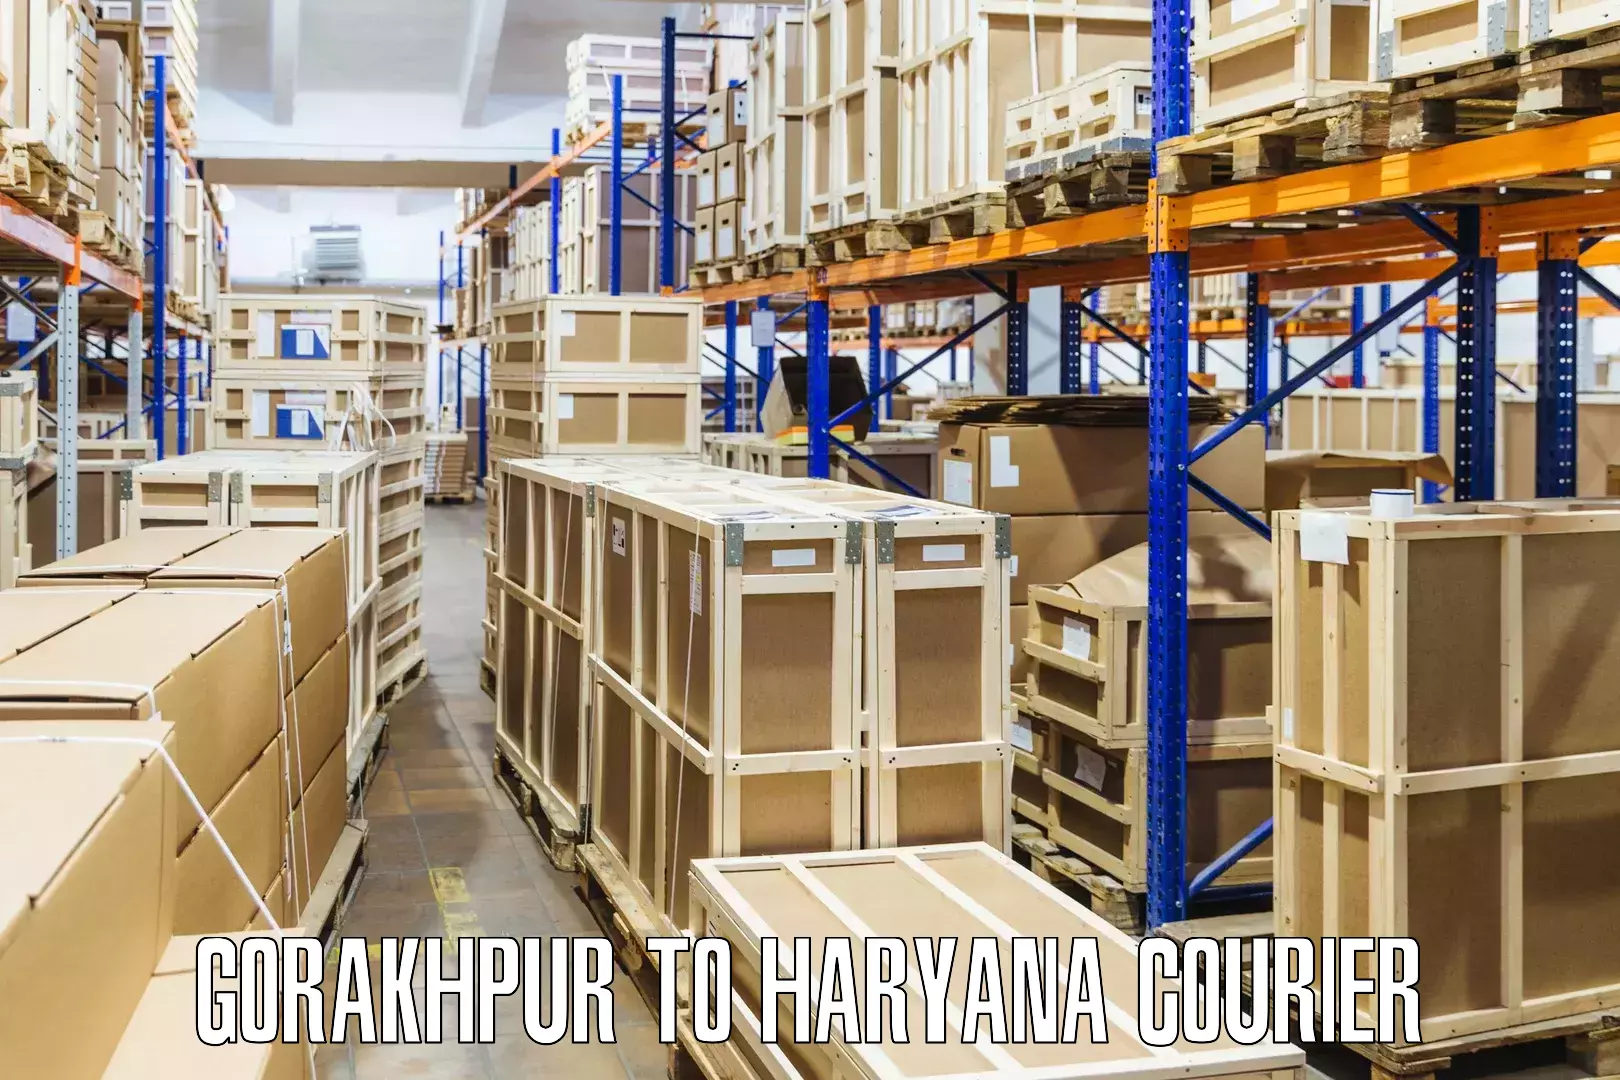 Package delivery network Gorakhpur to Yamuna Nagar